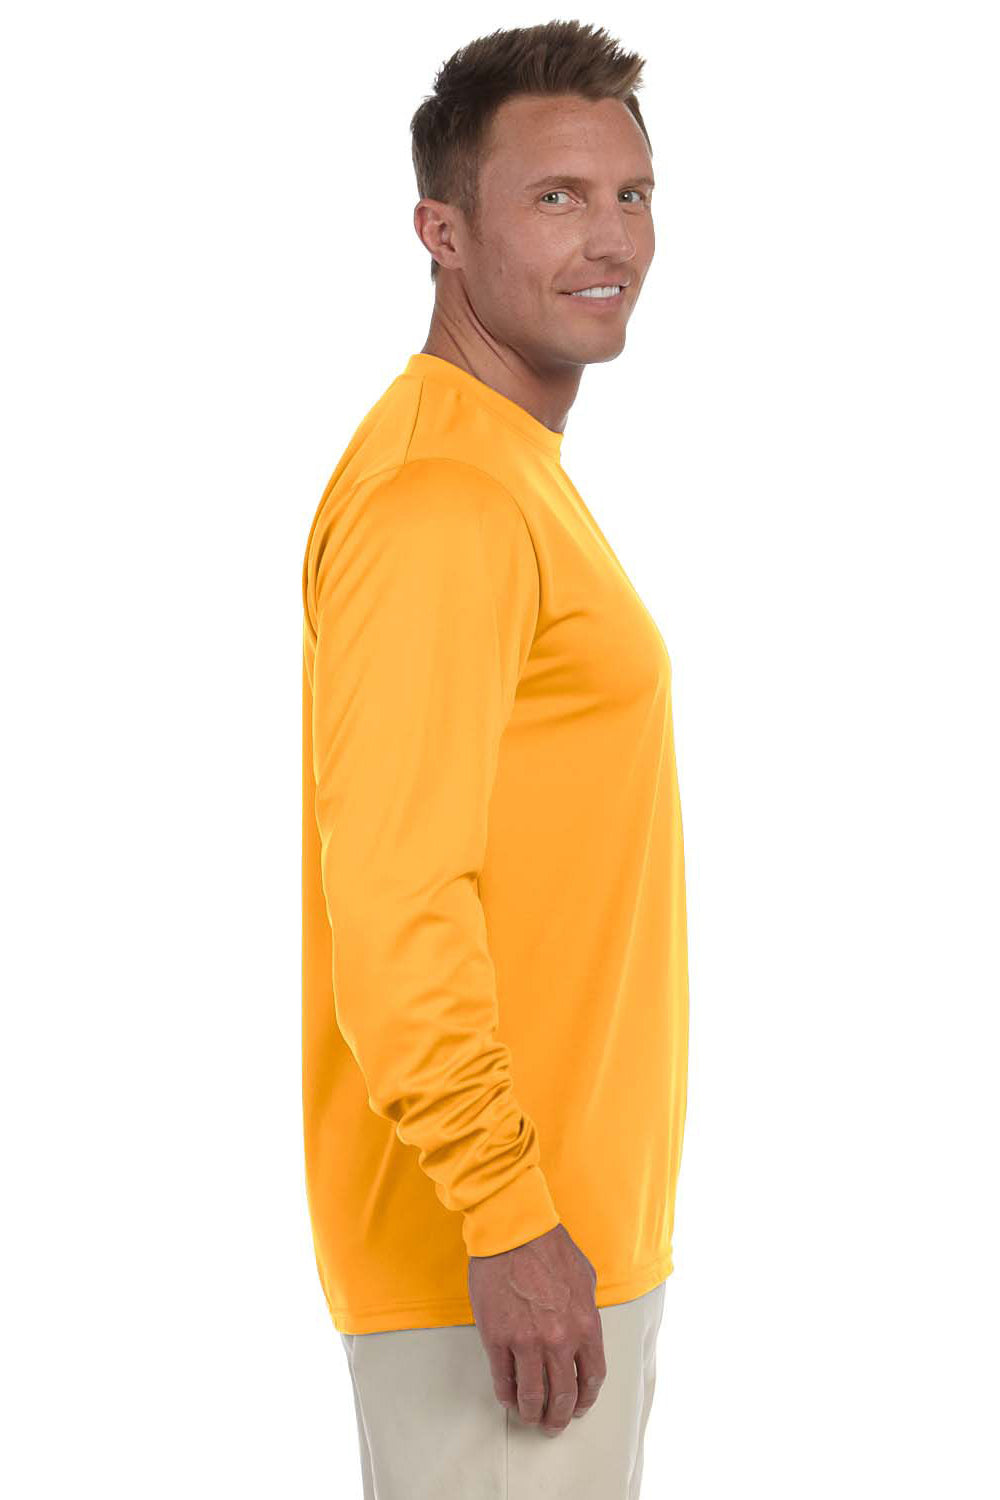 Augusta Sportswear 788 Mens Moisture Wicking Long Sleeve Crewneck T-Shirt Gold Model Side